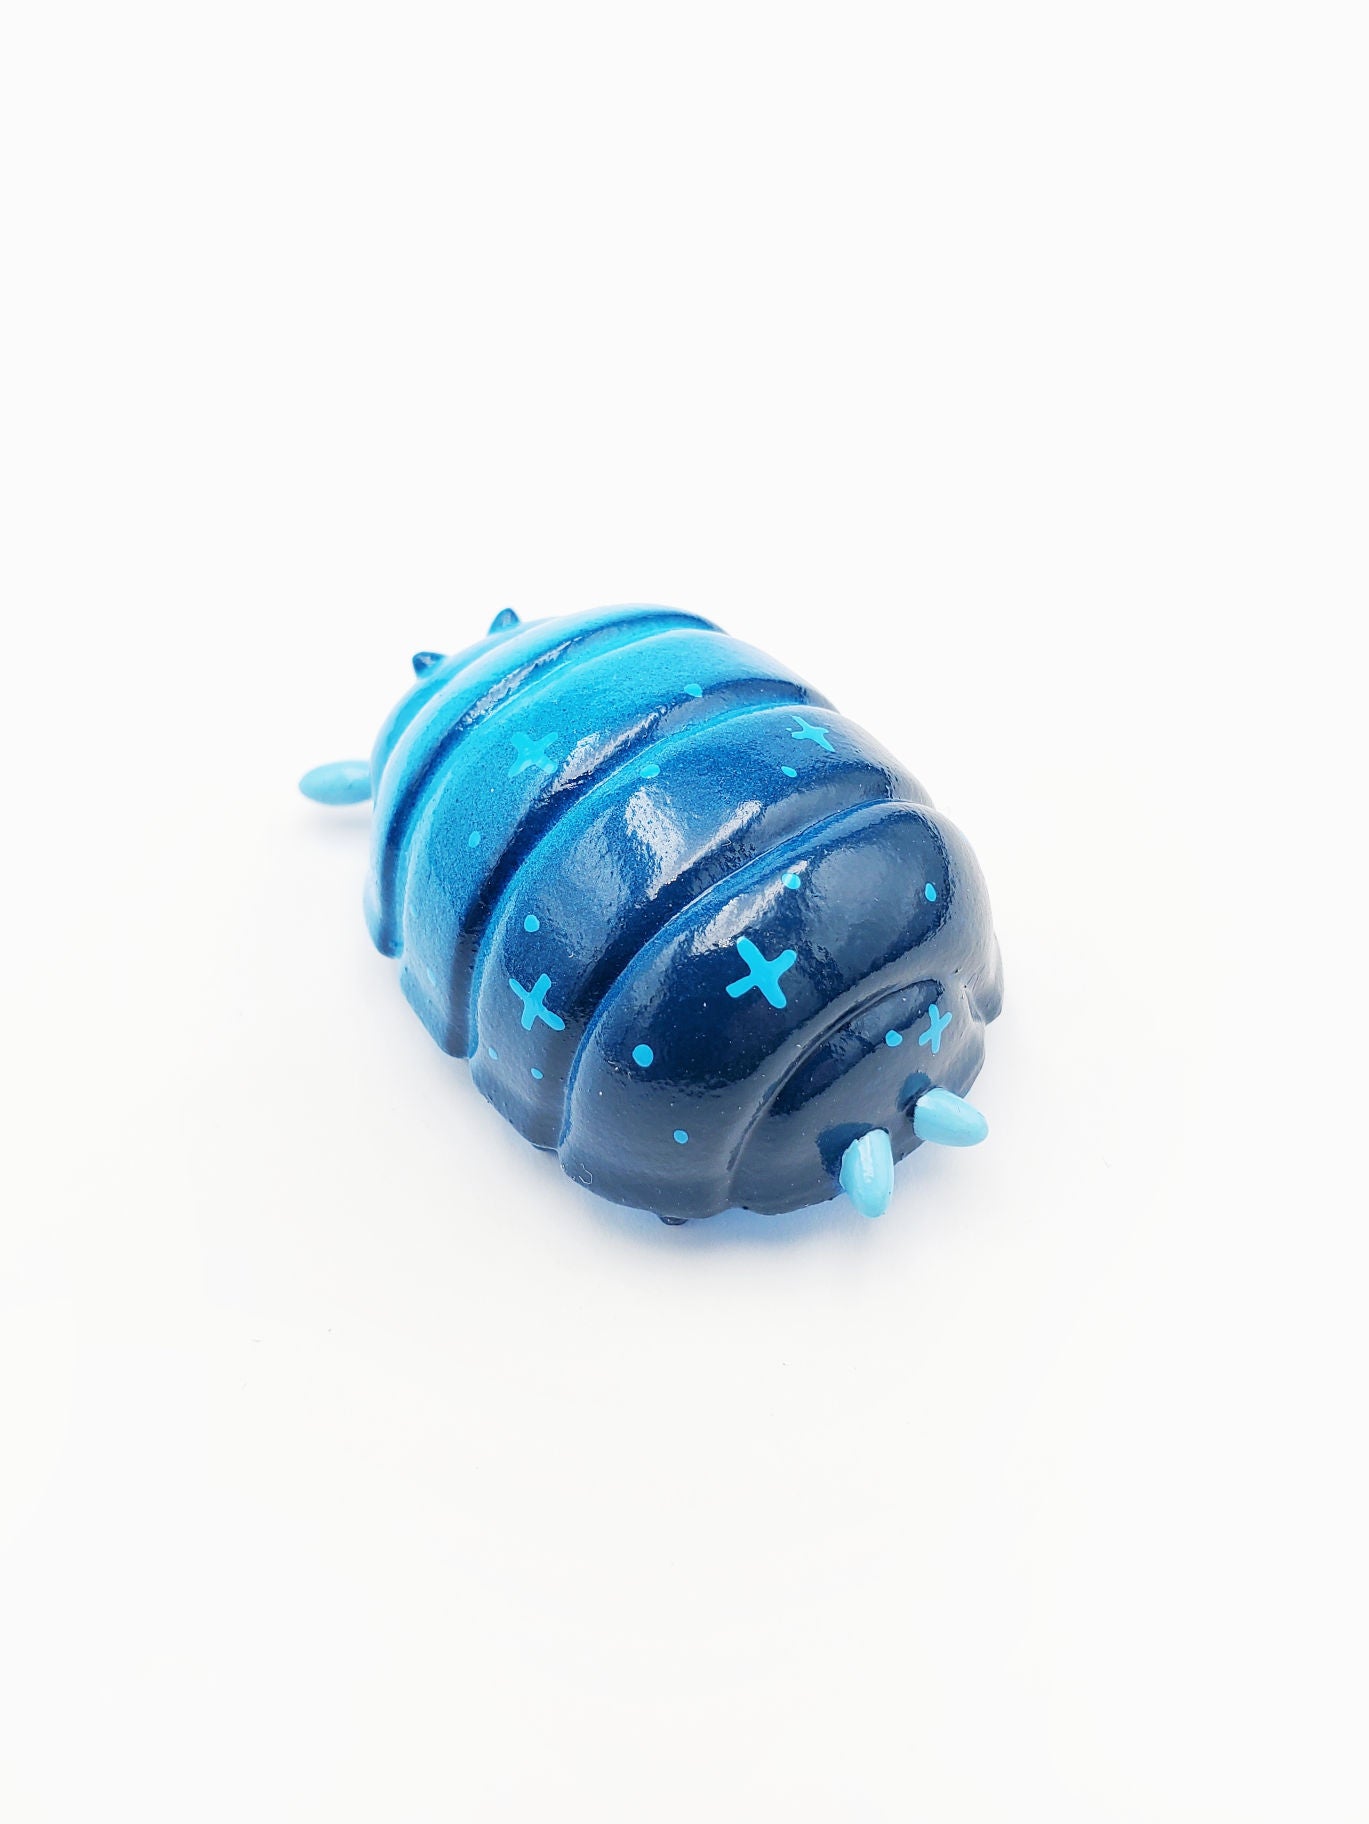 "Magic Blueberry" Pillbug Figurine